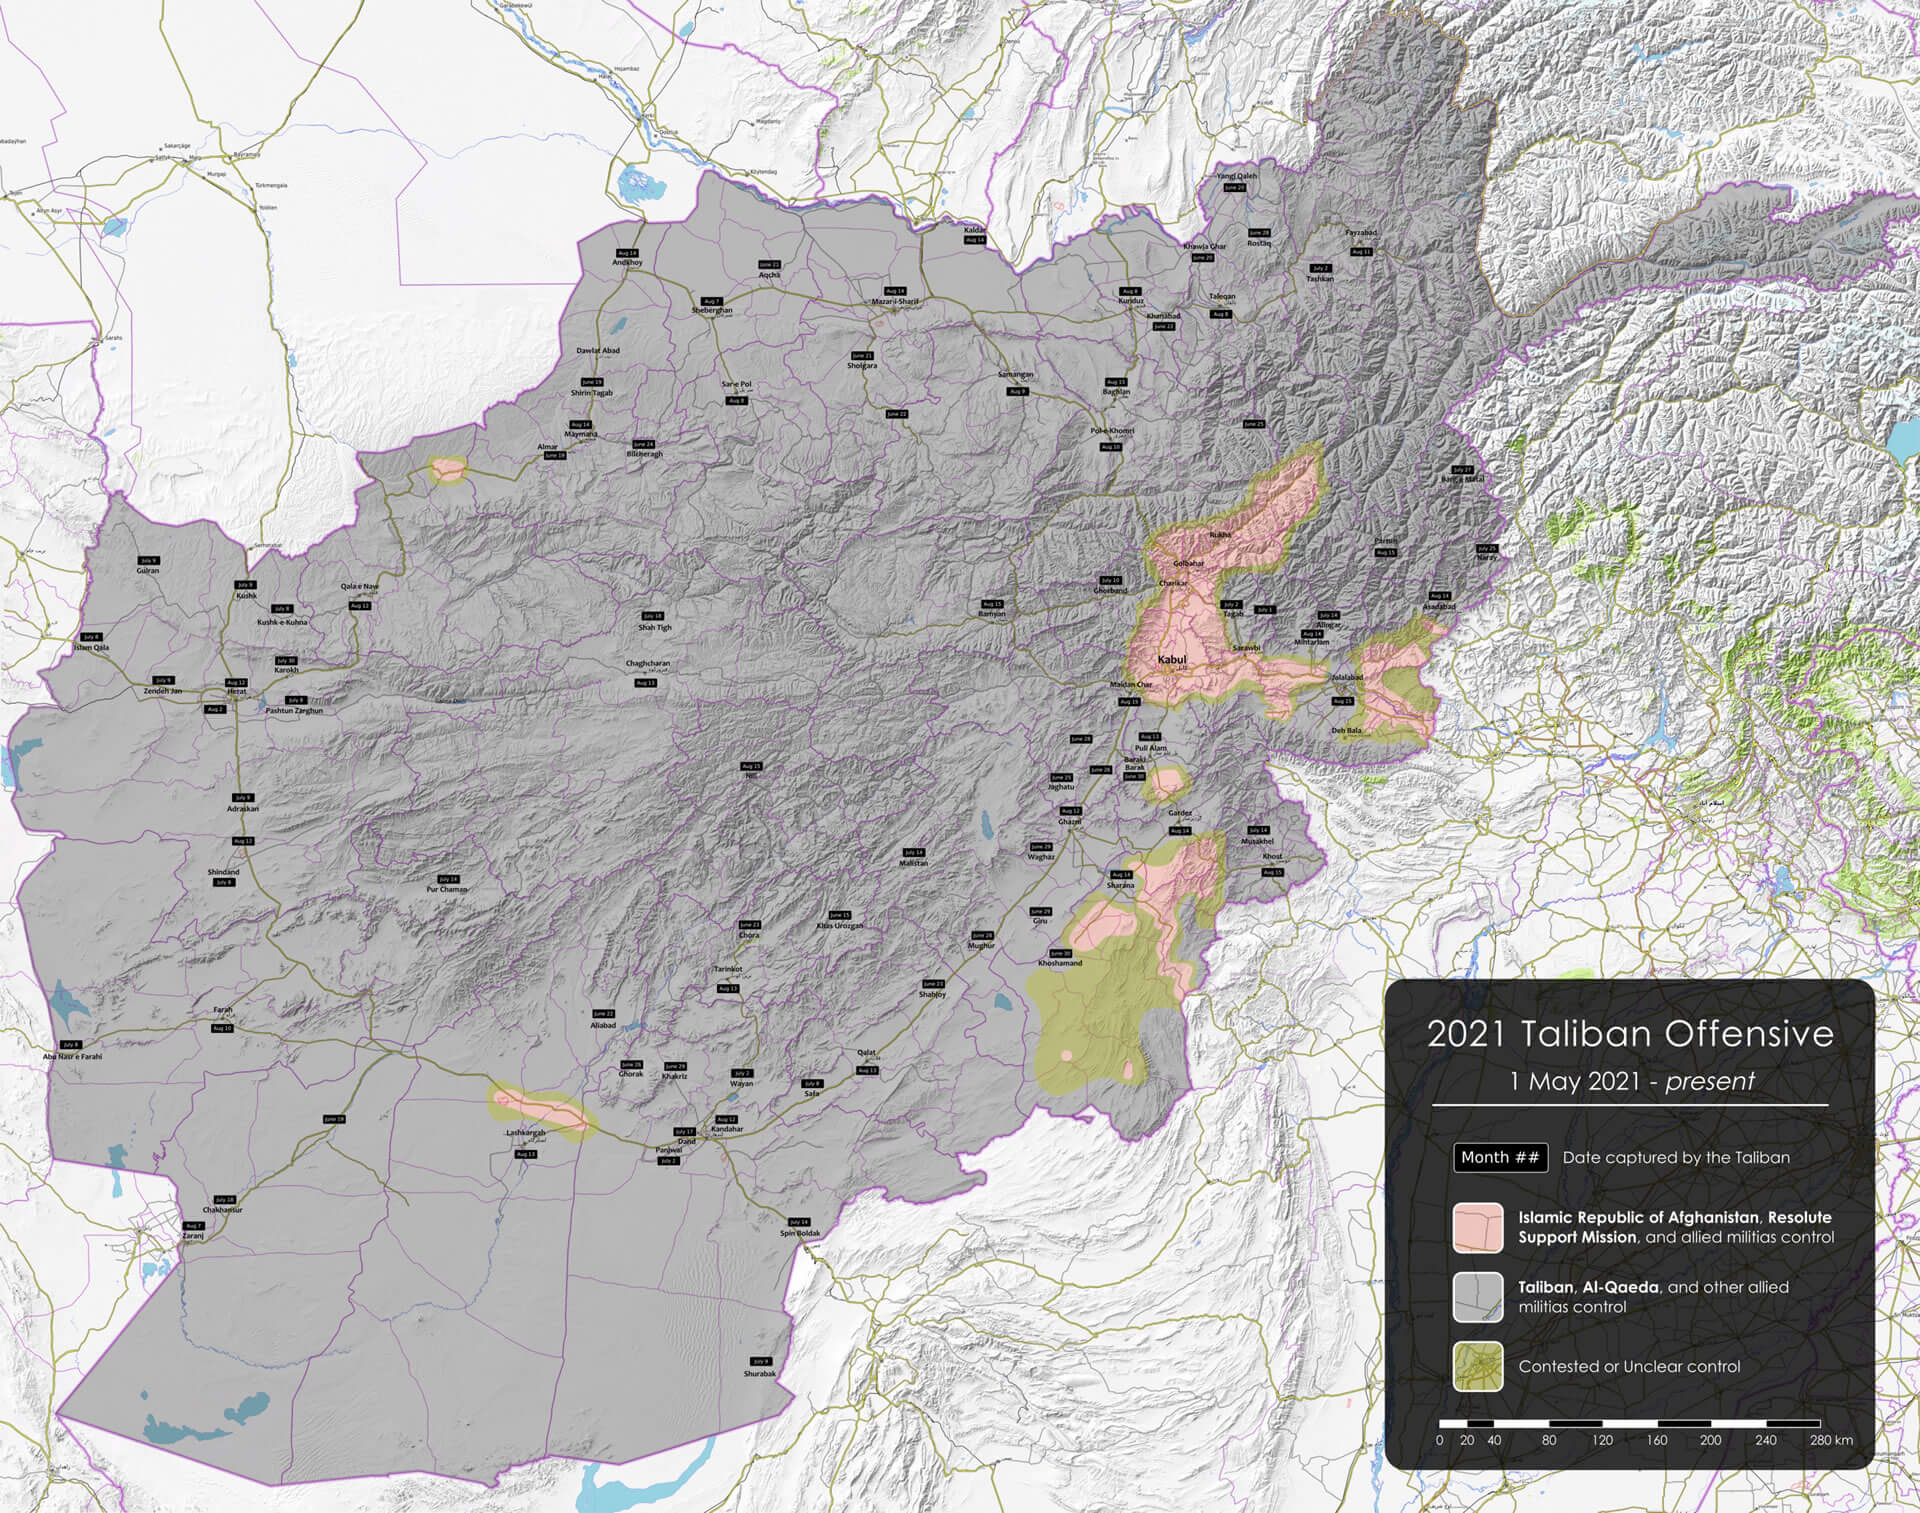 2021 Taliban Offensive Map